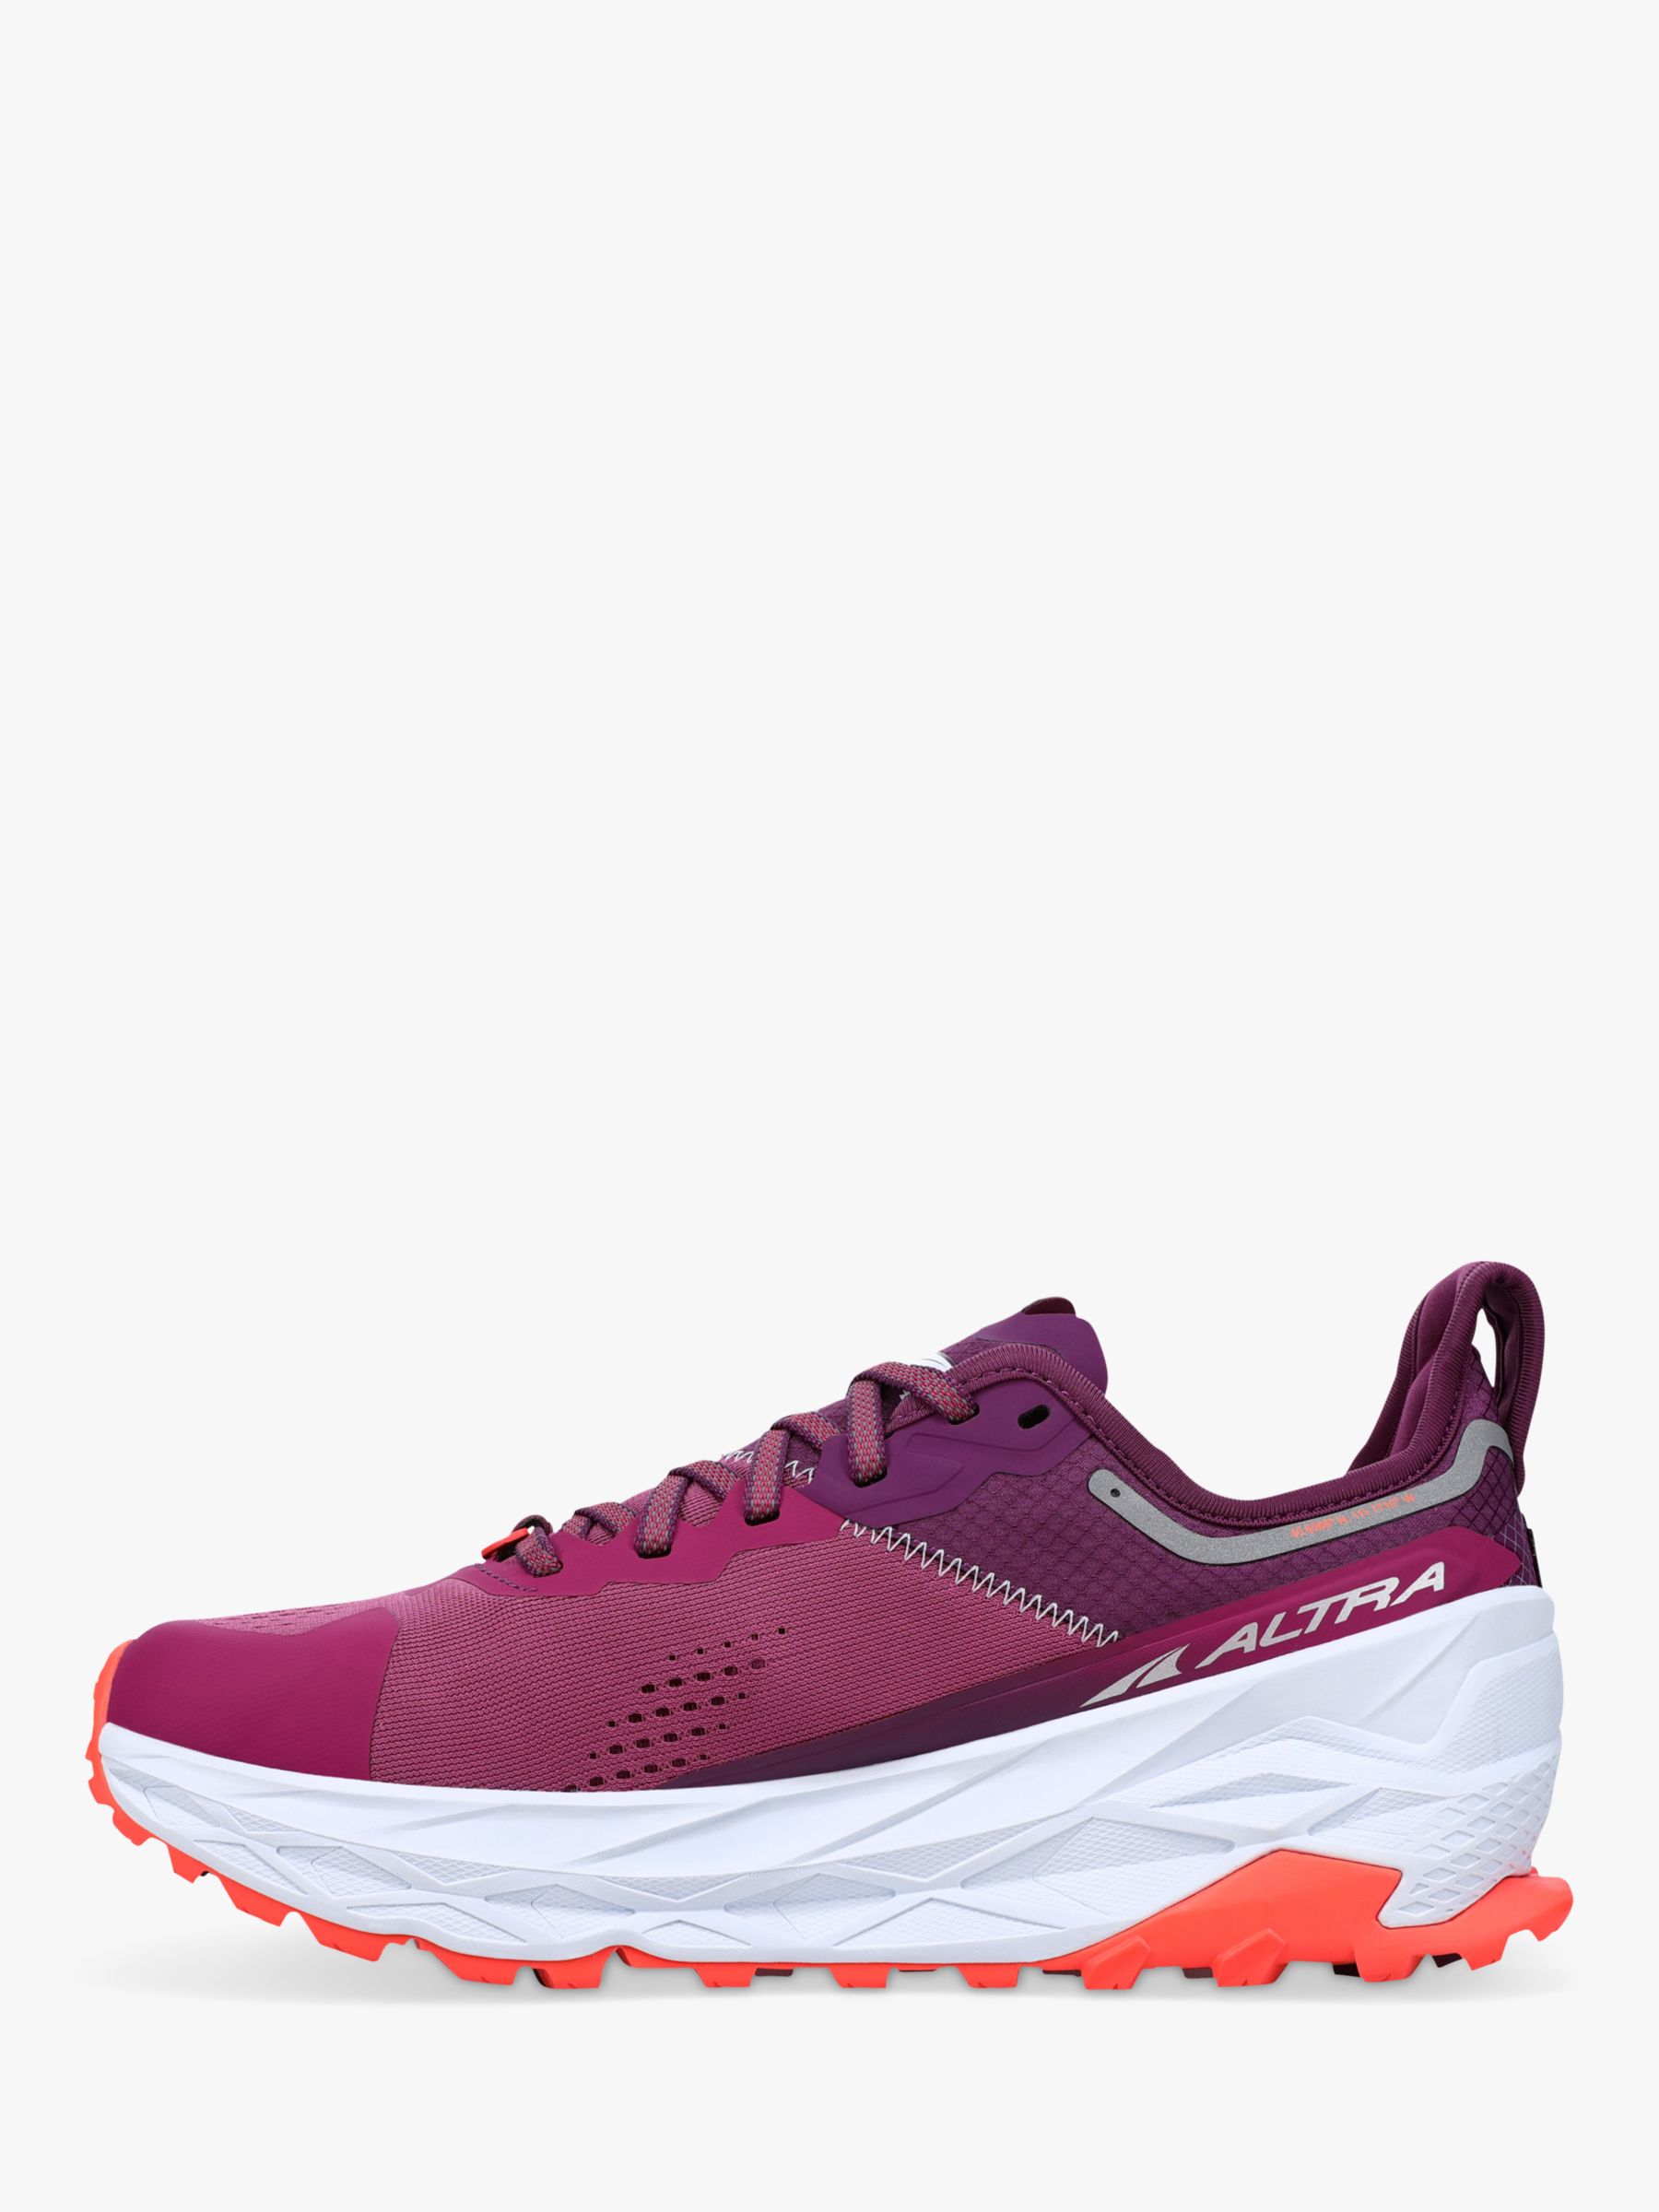 Buy Altra Olympus 5 Women's Running Shoes, Purple/Orange Online at johnlewis.com